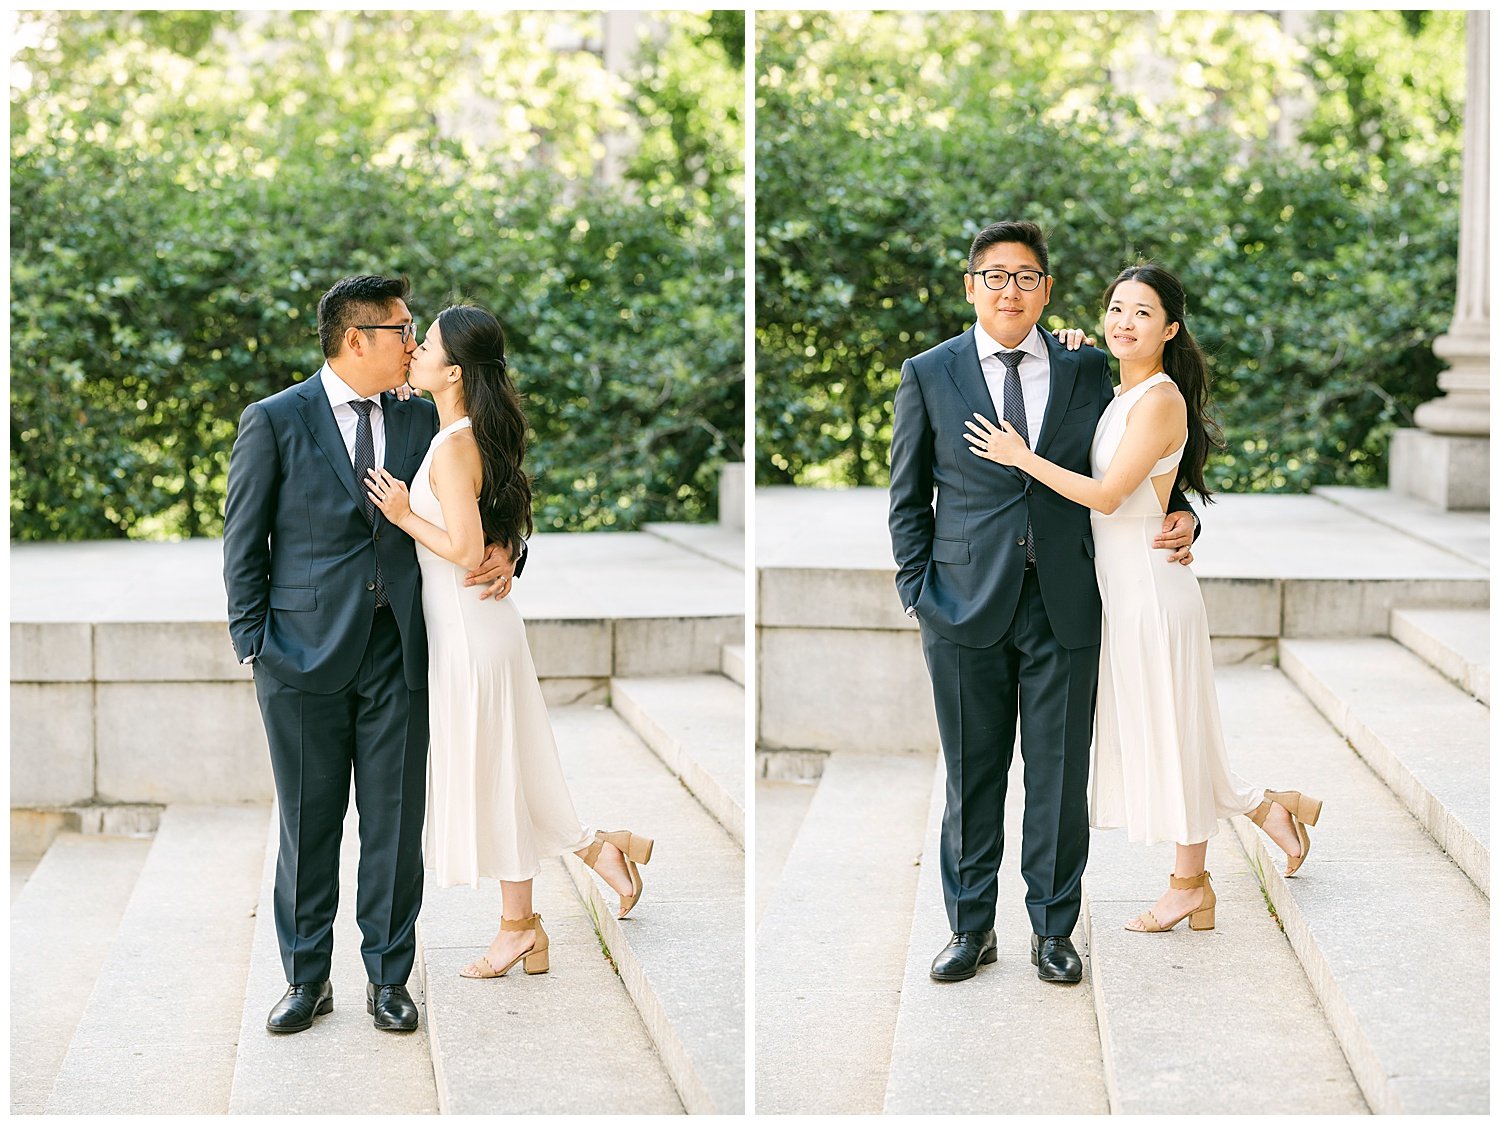 NYC-Marriage-Bureau-Elopement-Wedding-at-City-Hall-Apollo-Fields-09.jpg